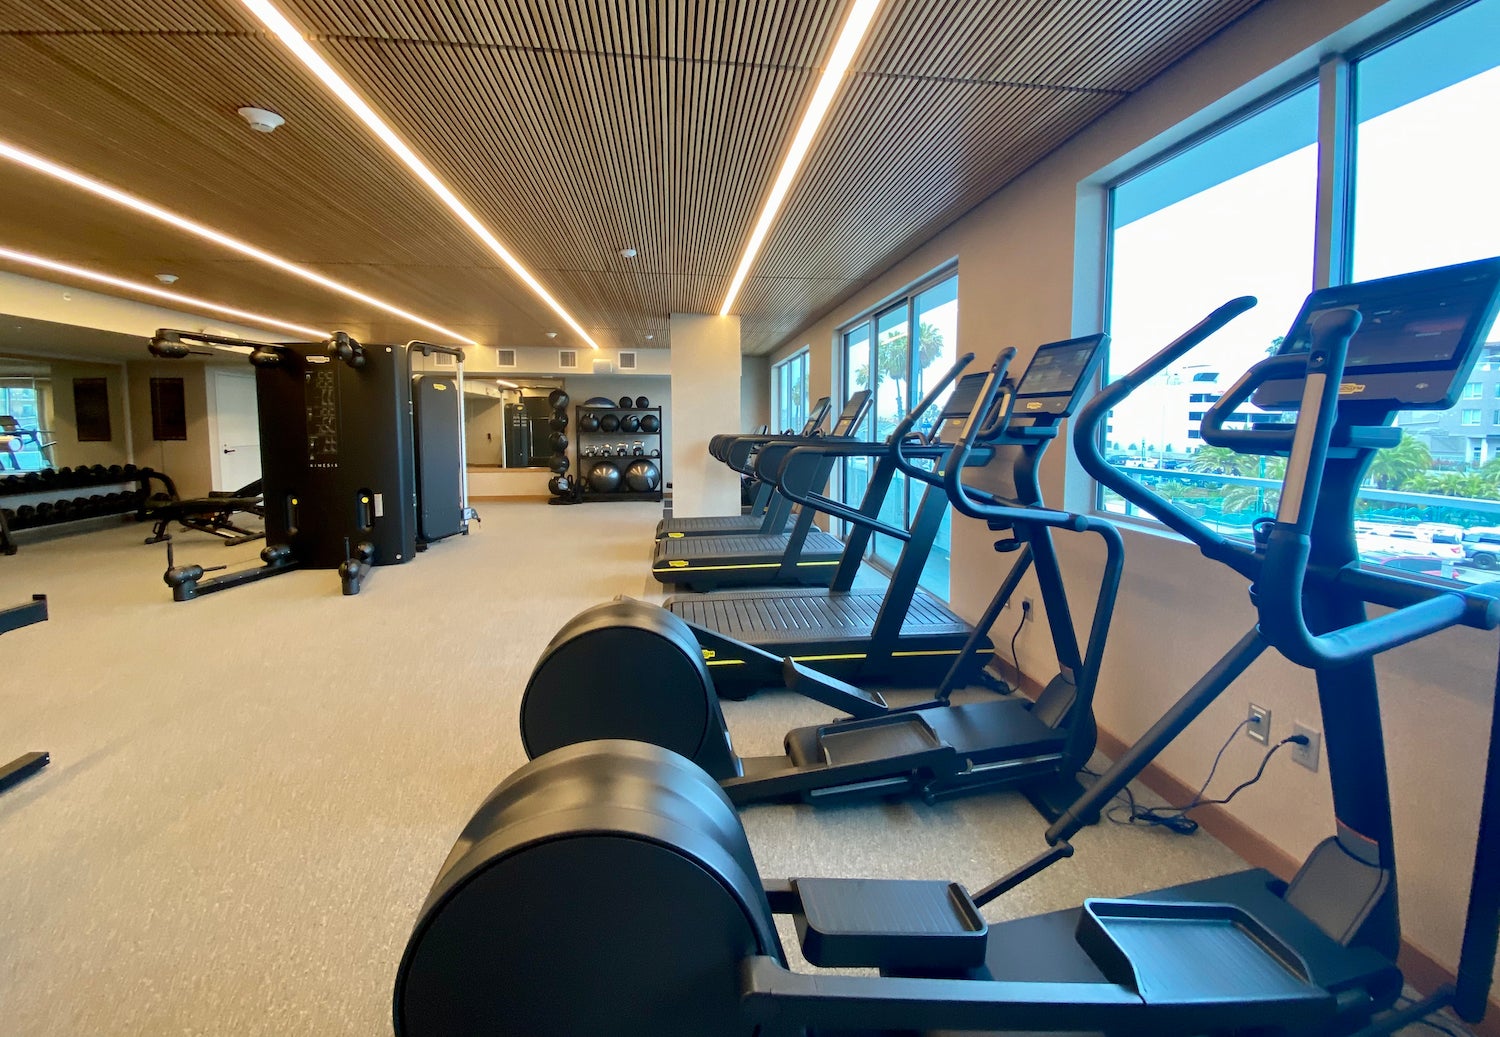 Treadmills at the hotel gym